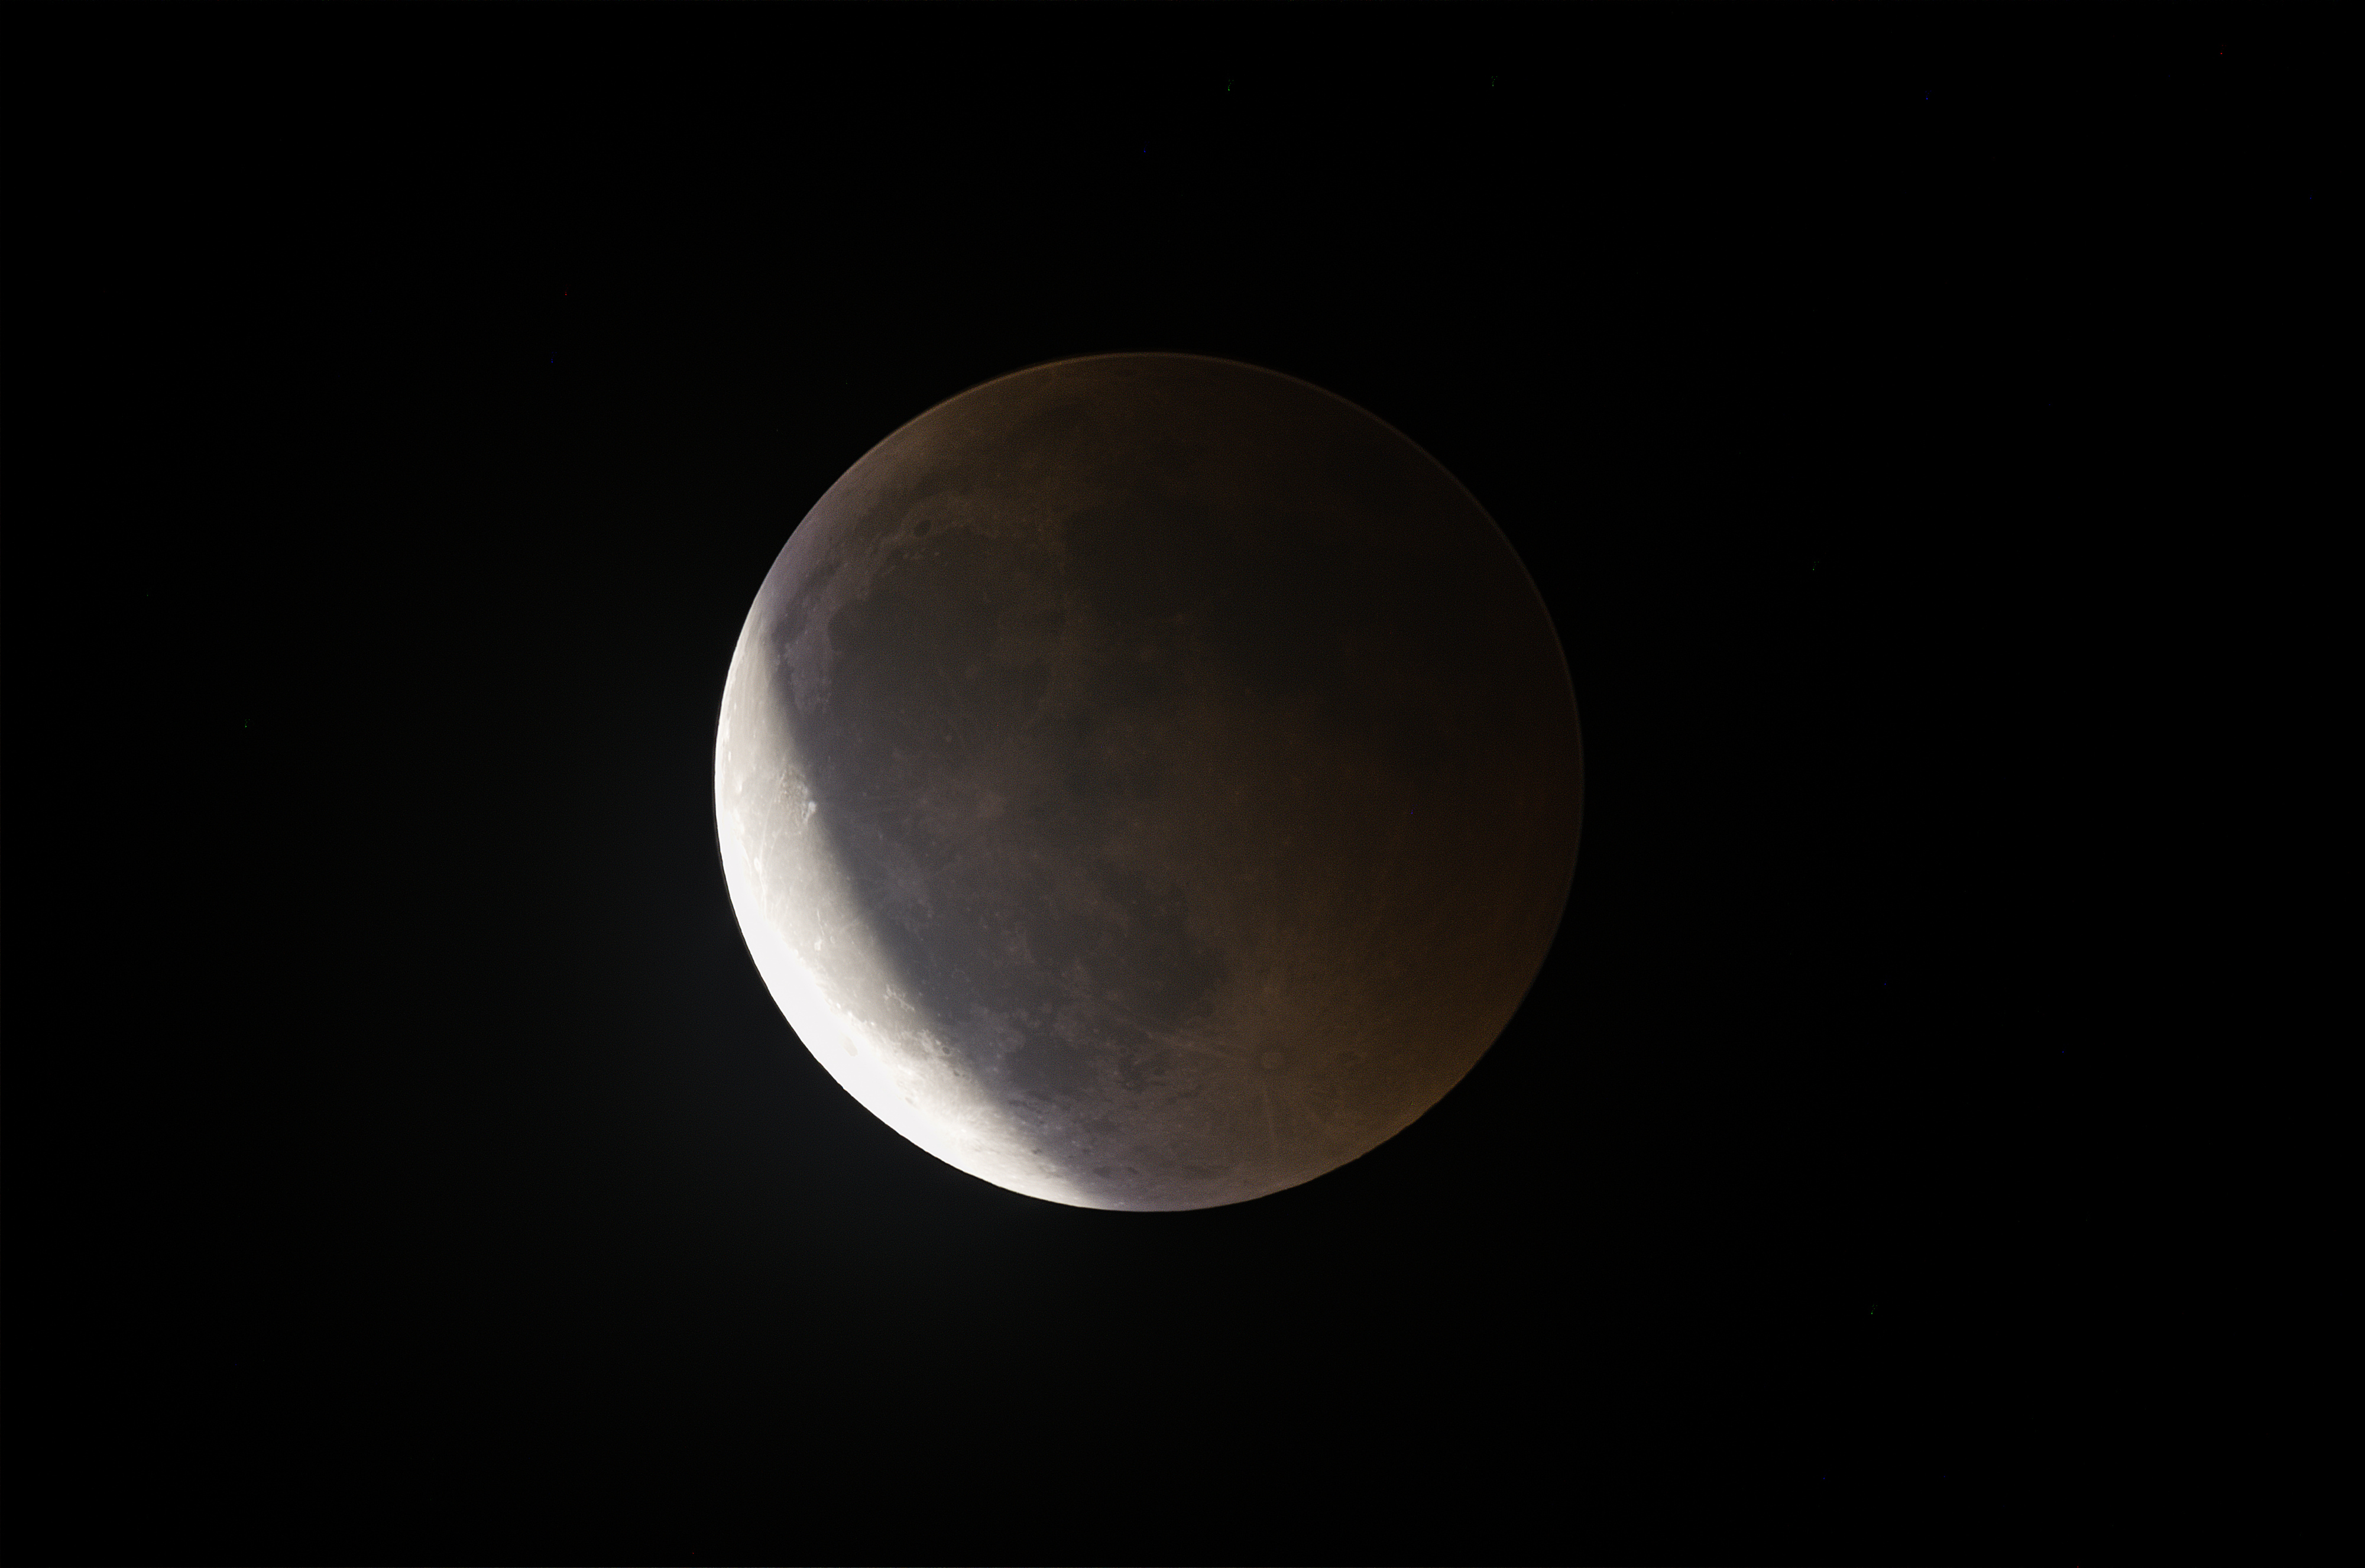 Eclipse de lune 27 juillet 2018